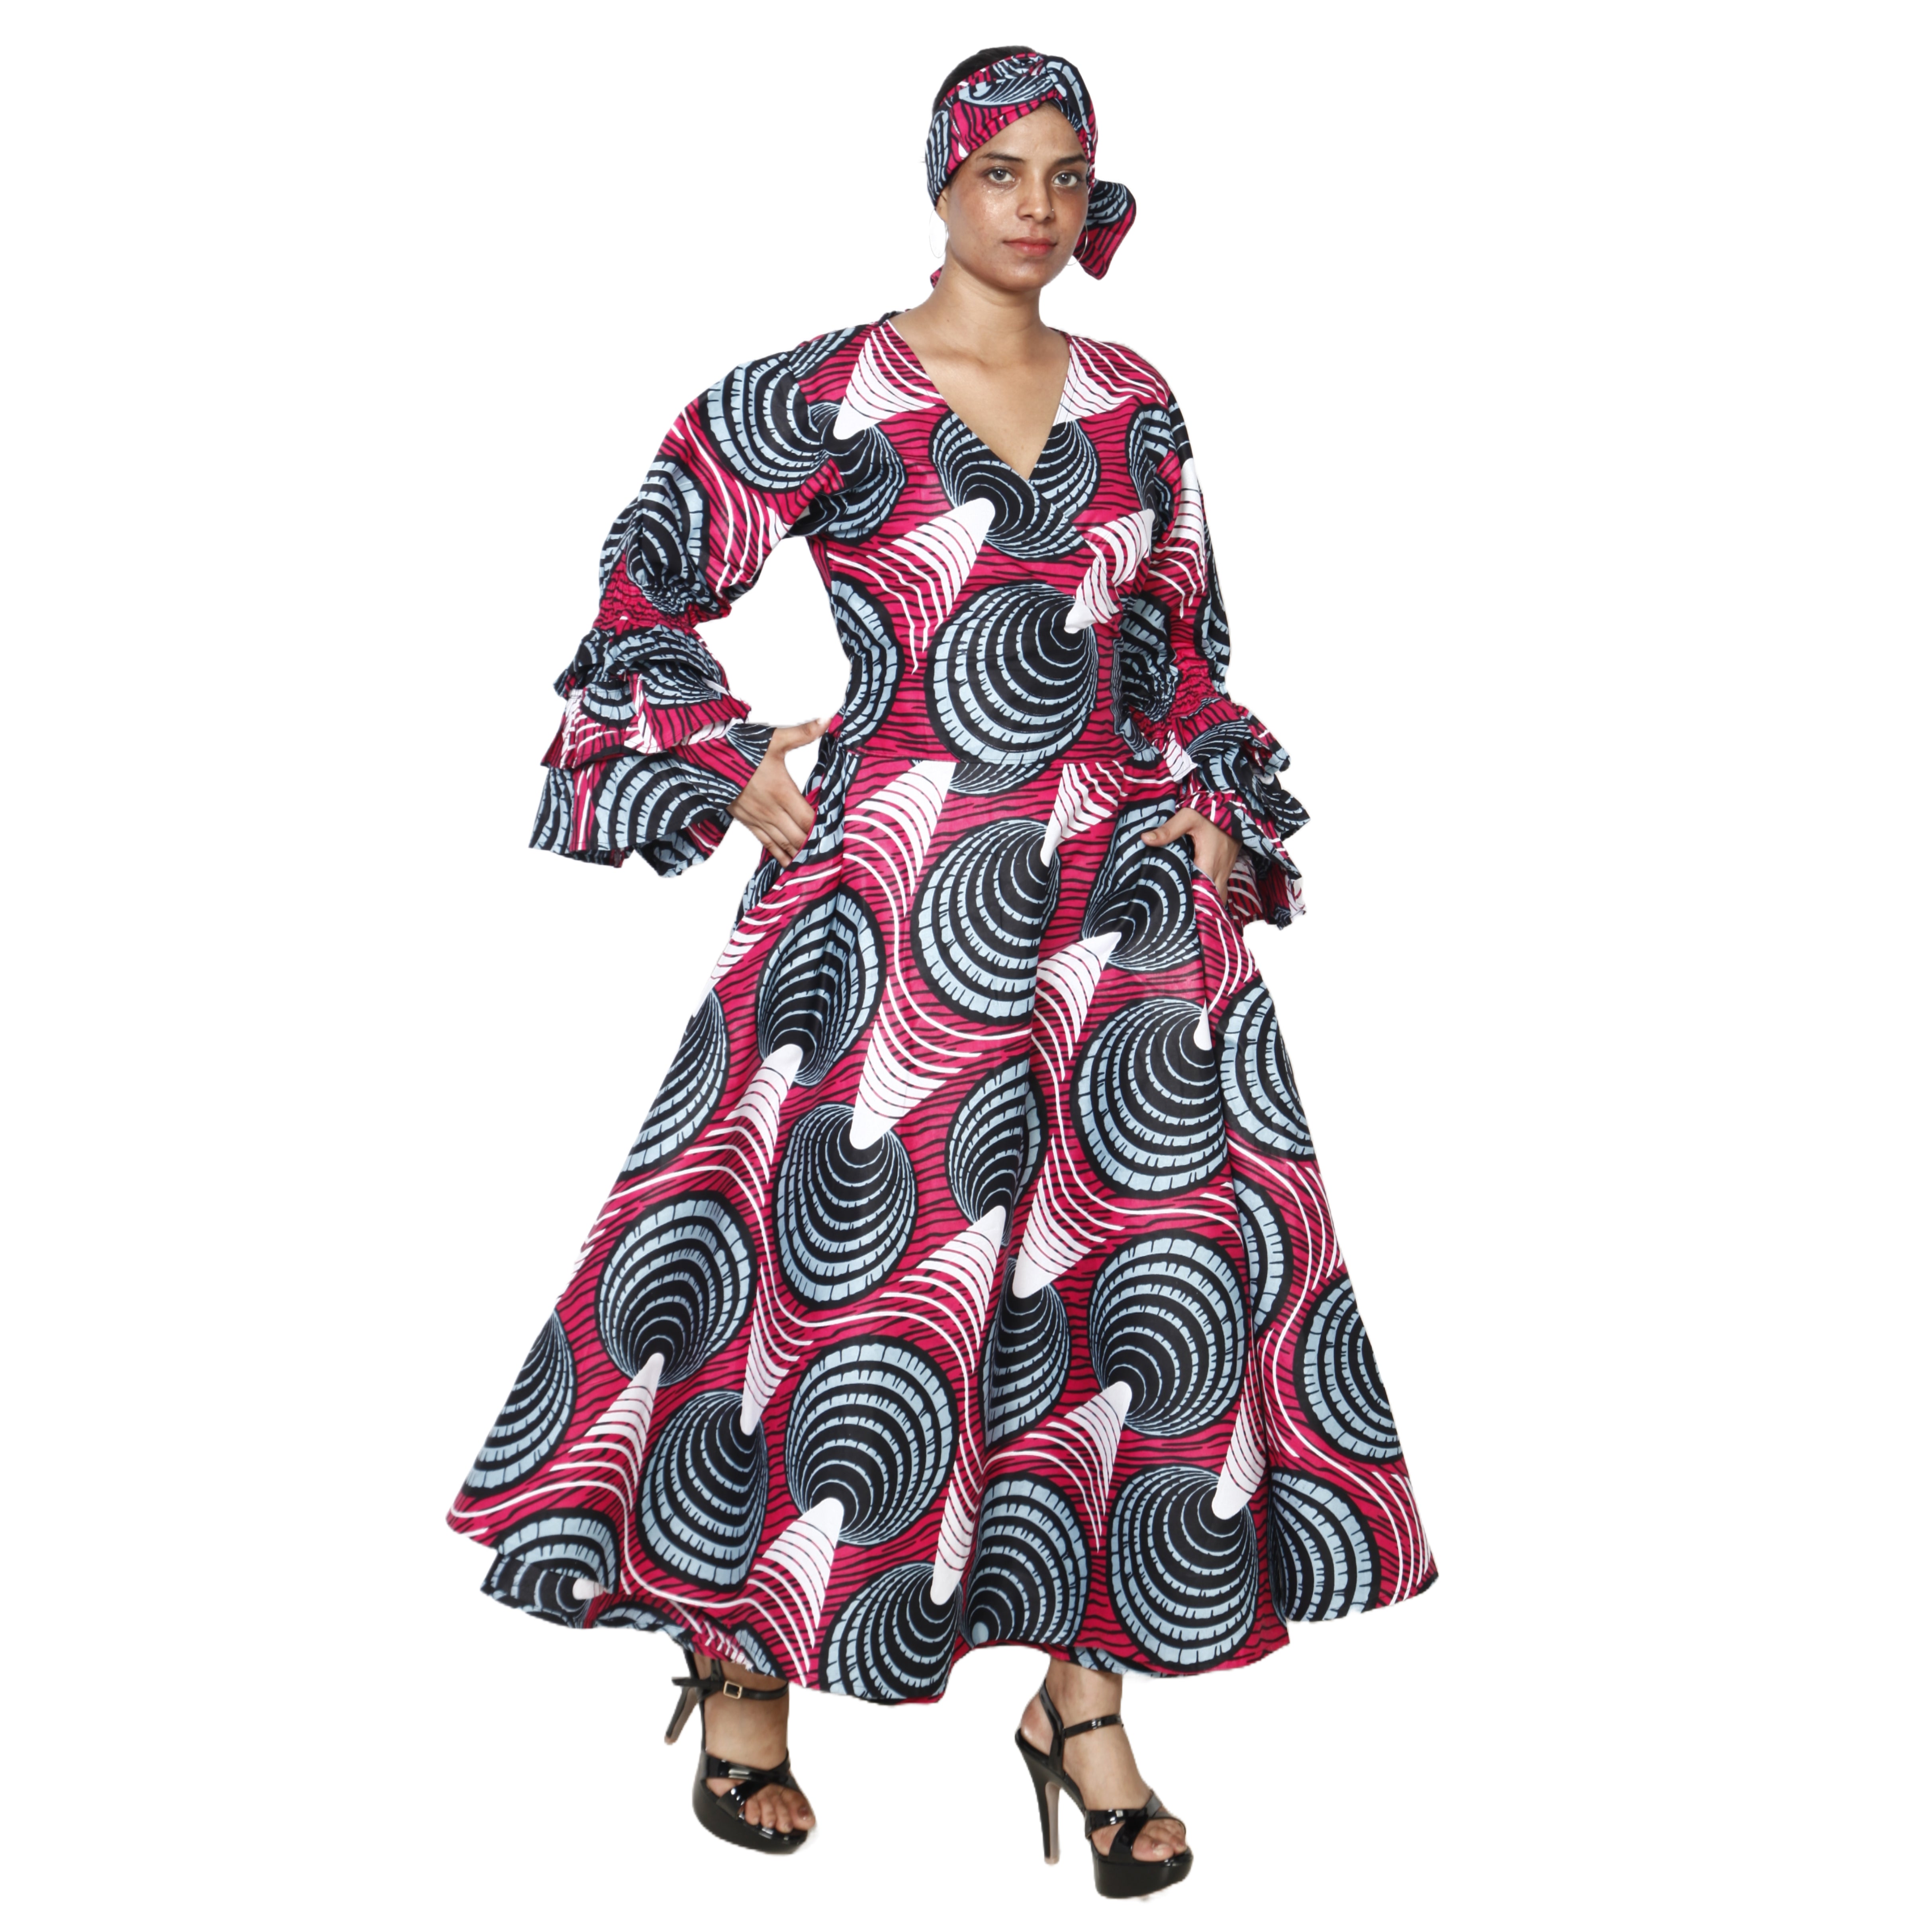 Women's Tiered Frill Sleeve Wrap Dress - FI-70